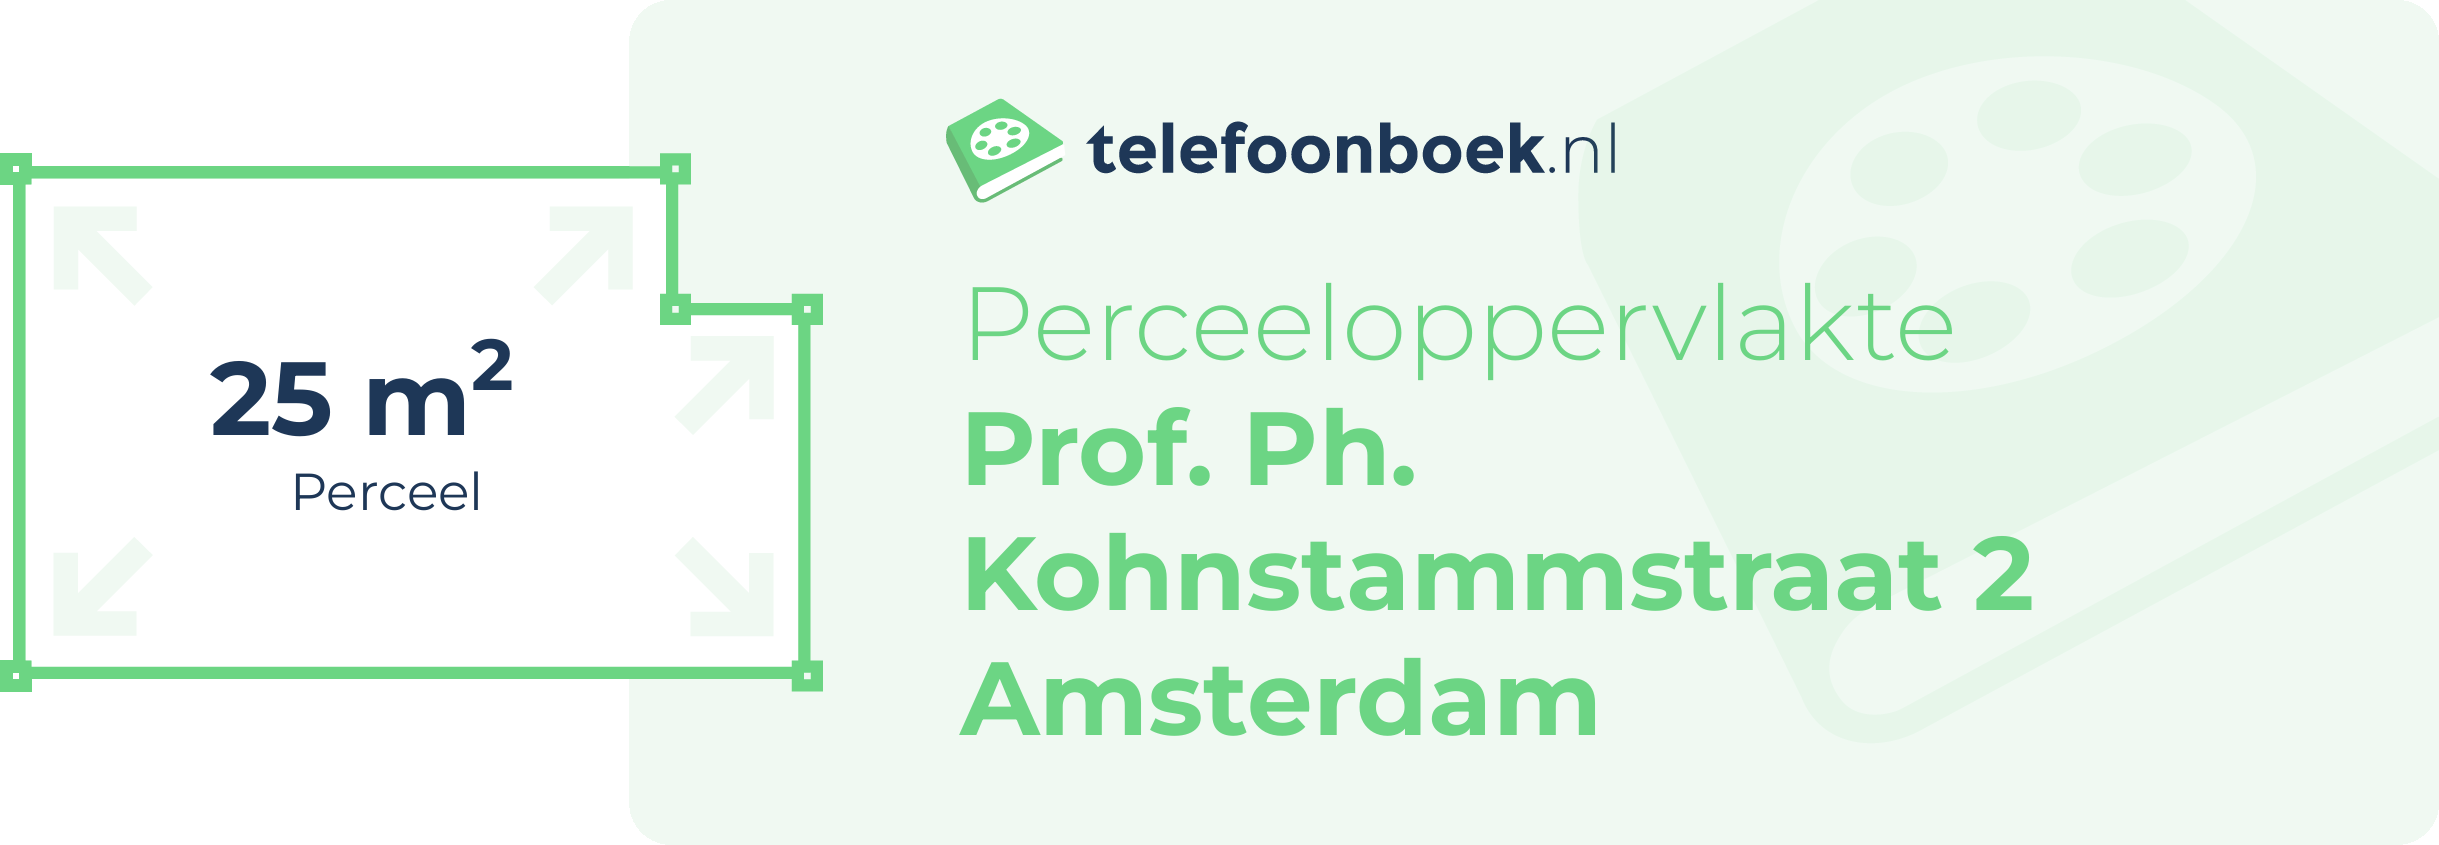 Perceeloppervlakte Prof. Ph. Kohnstammstraat 2 Amsterdam